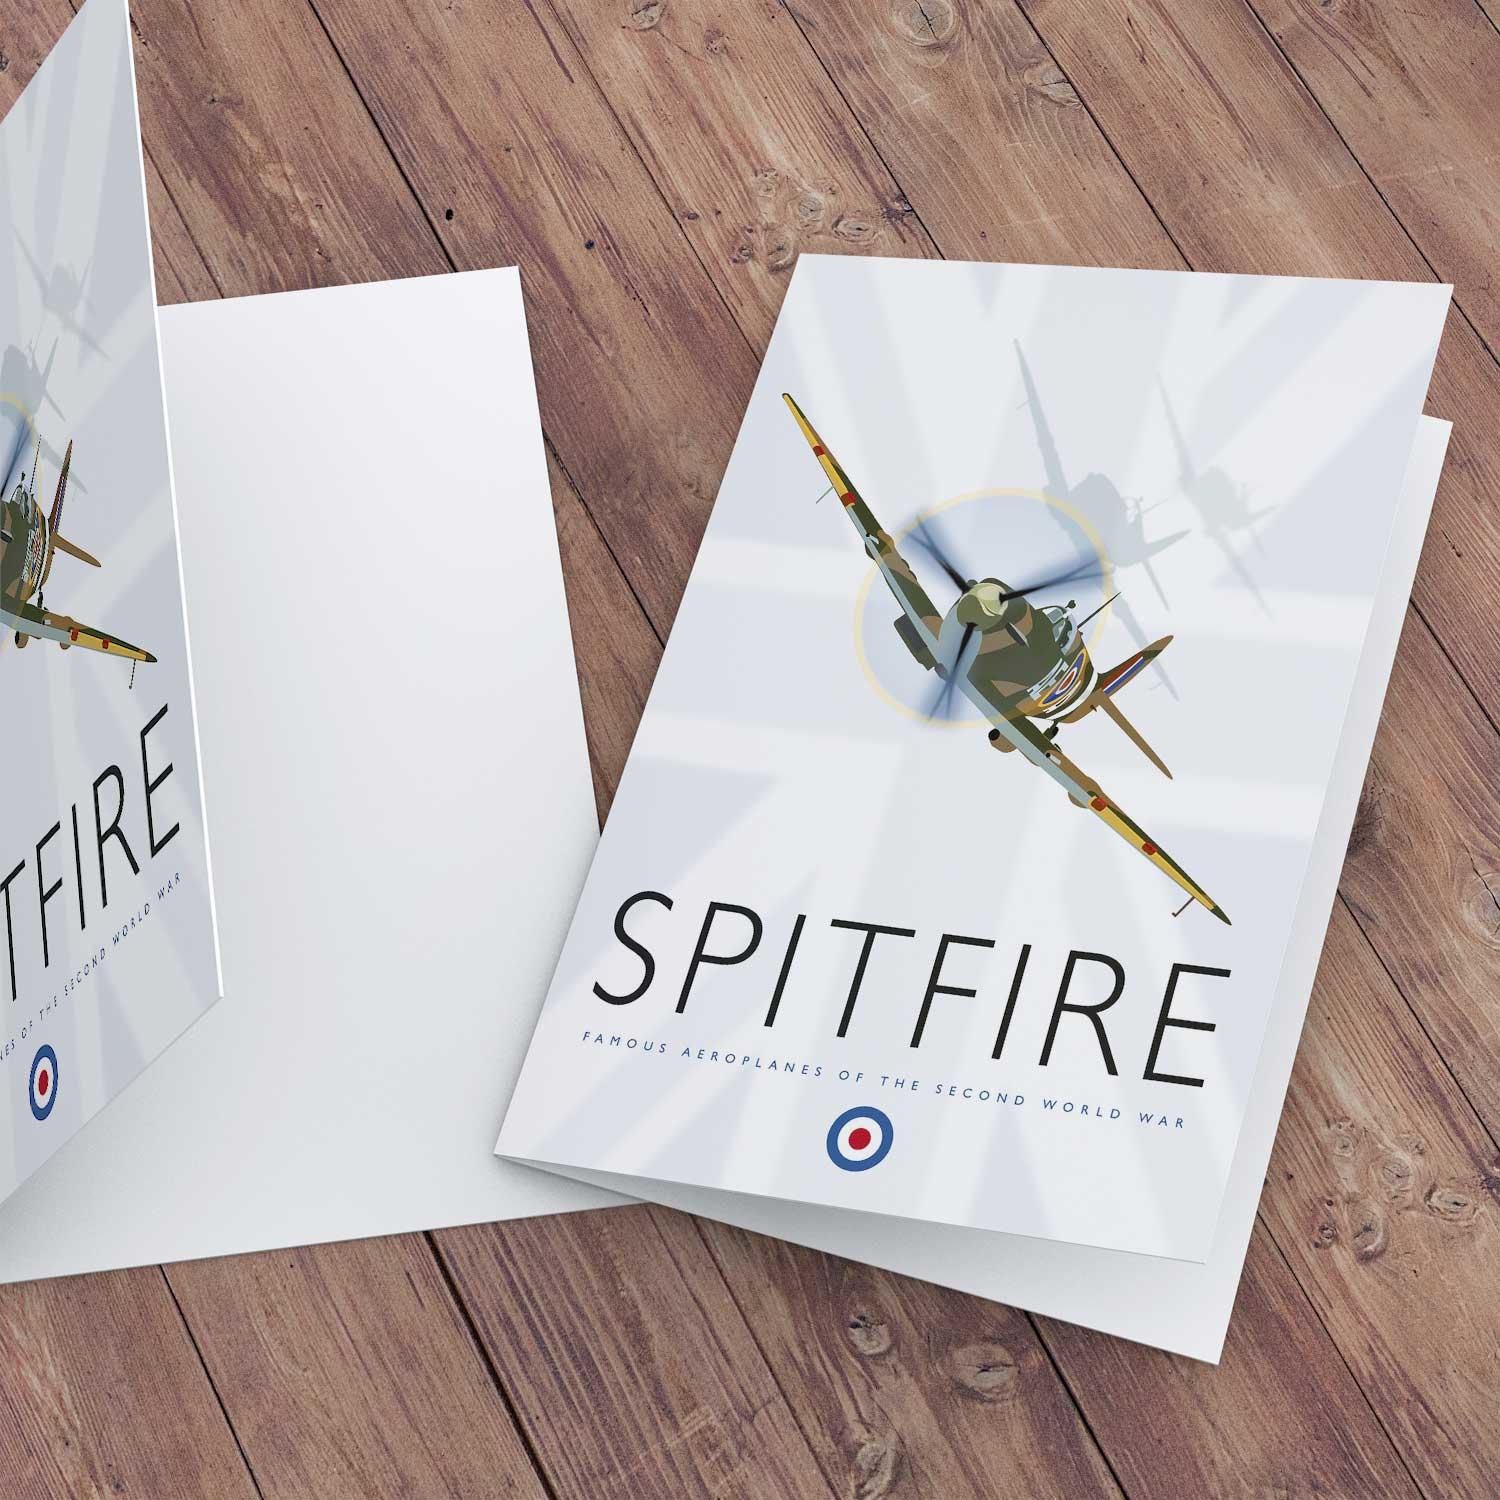 Spitfire Greeting Card from an original painting by artist Peter McDermott